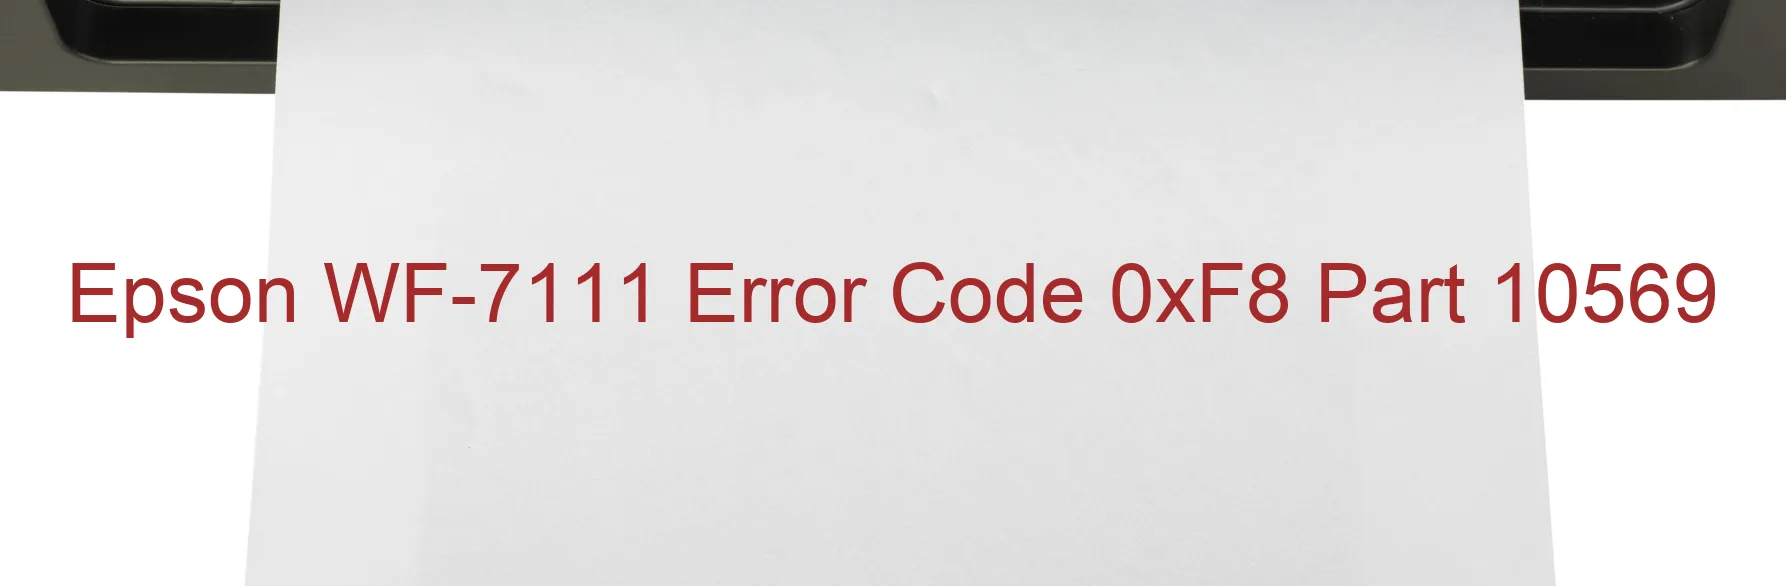 Epson WF-7111 Error Code 0xF8 Part 10569